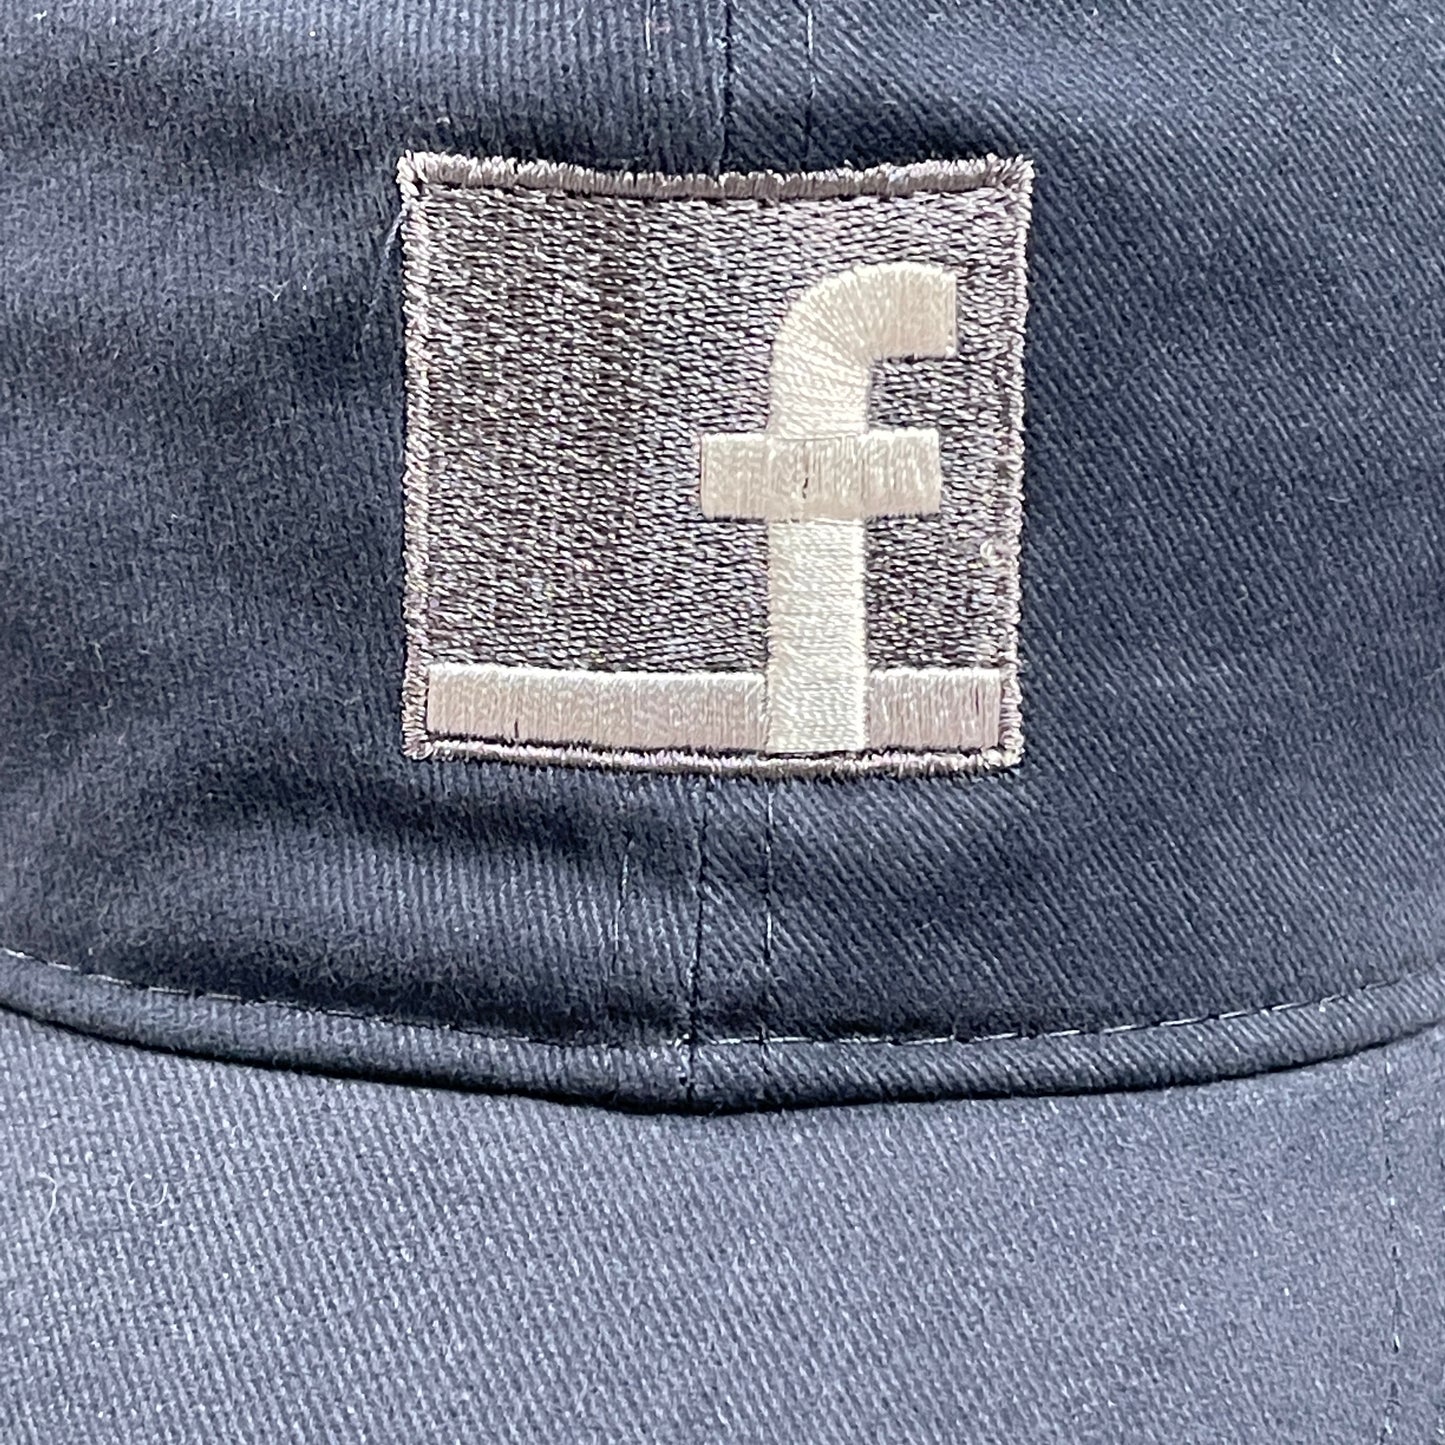 FACEBOOK Embroidered Baseball Cap Adjustable Hat Sz OS Black (New)